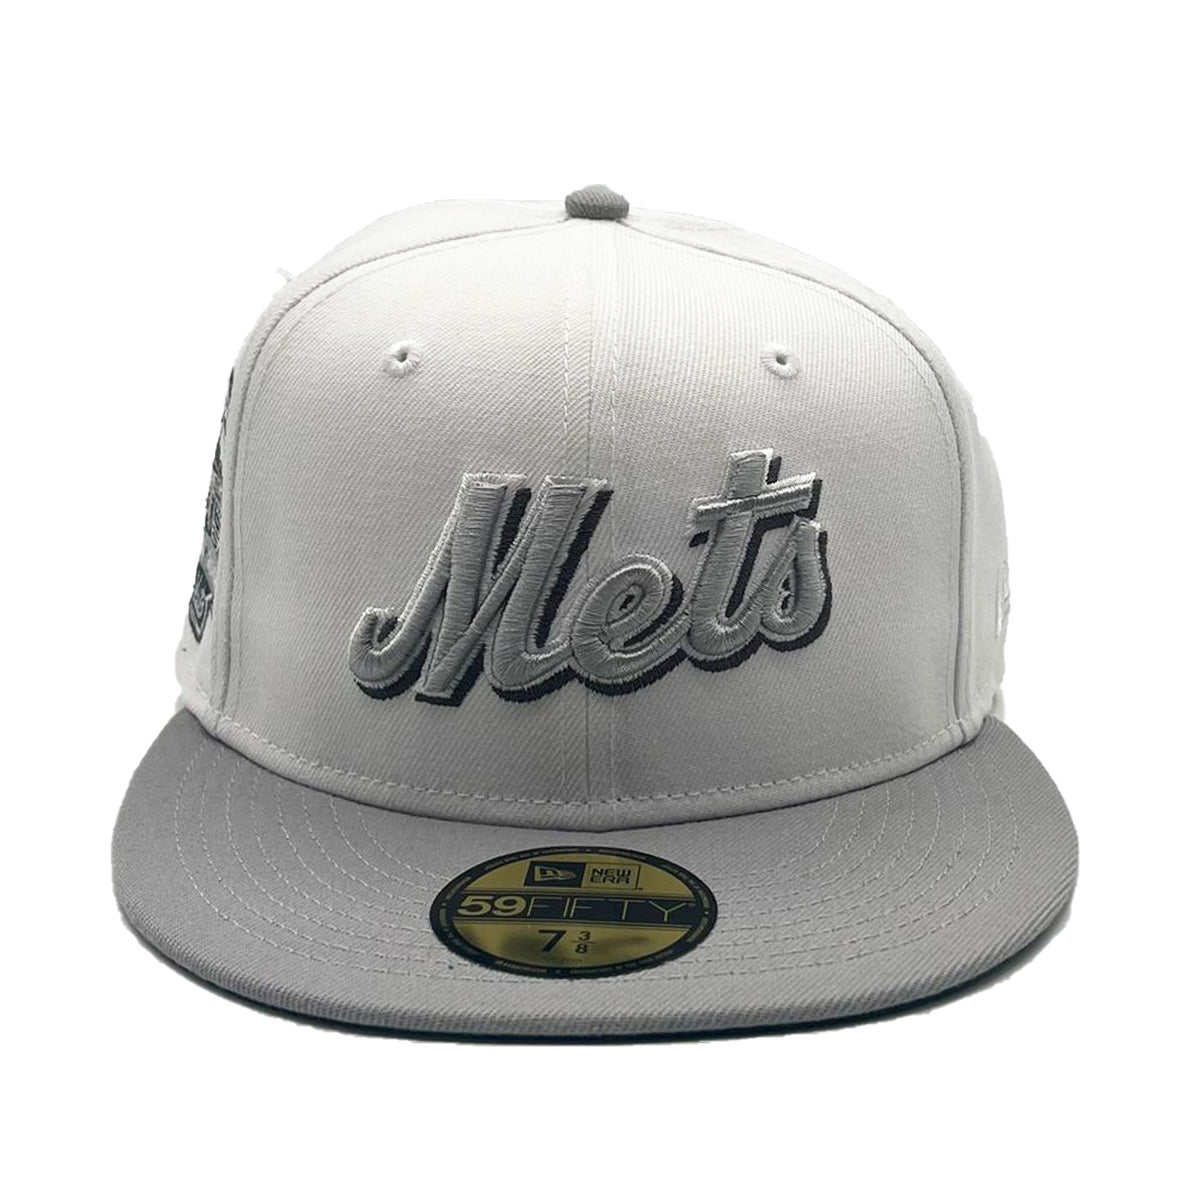 New Era Mens MLB New York Mets Shea Stadium 59FIFTY Fitted Hat 70761489 White/Gray, Dark Grey Undervisor 7 1/2